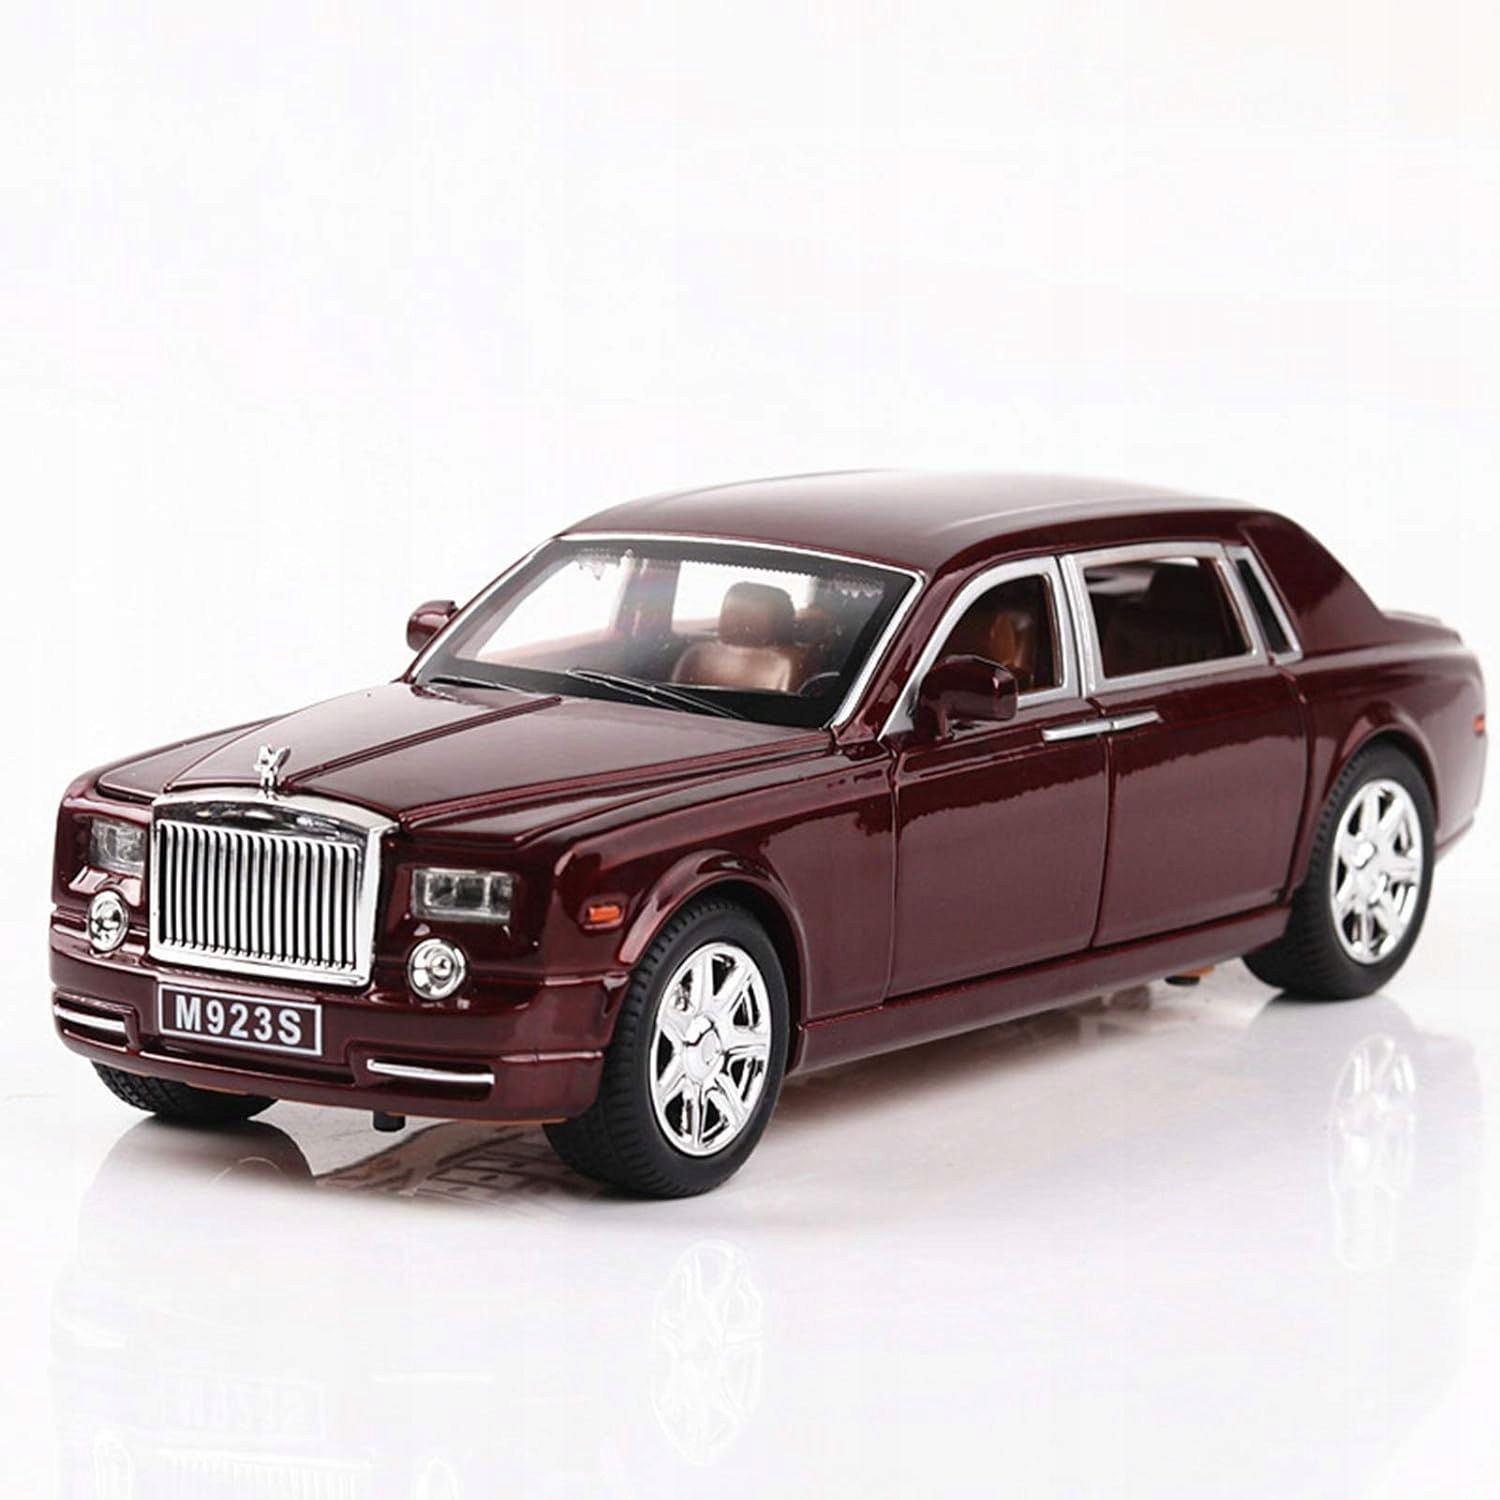 Samochód Rolls-Royce Phantom 1:24 Metal Limuzyna